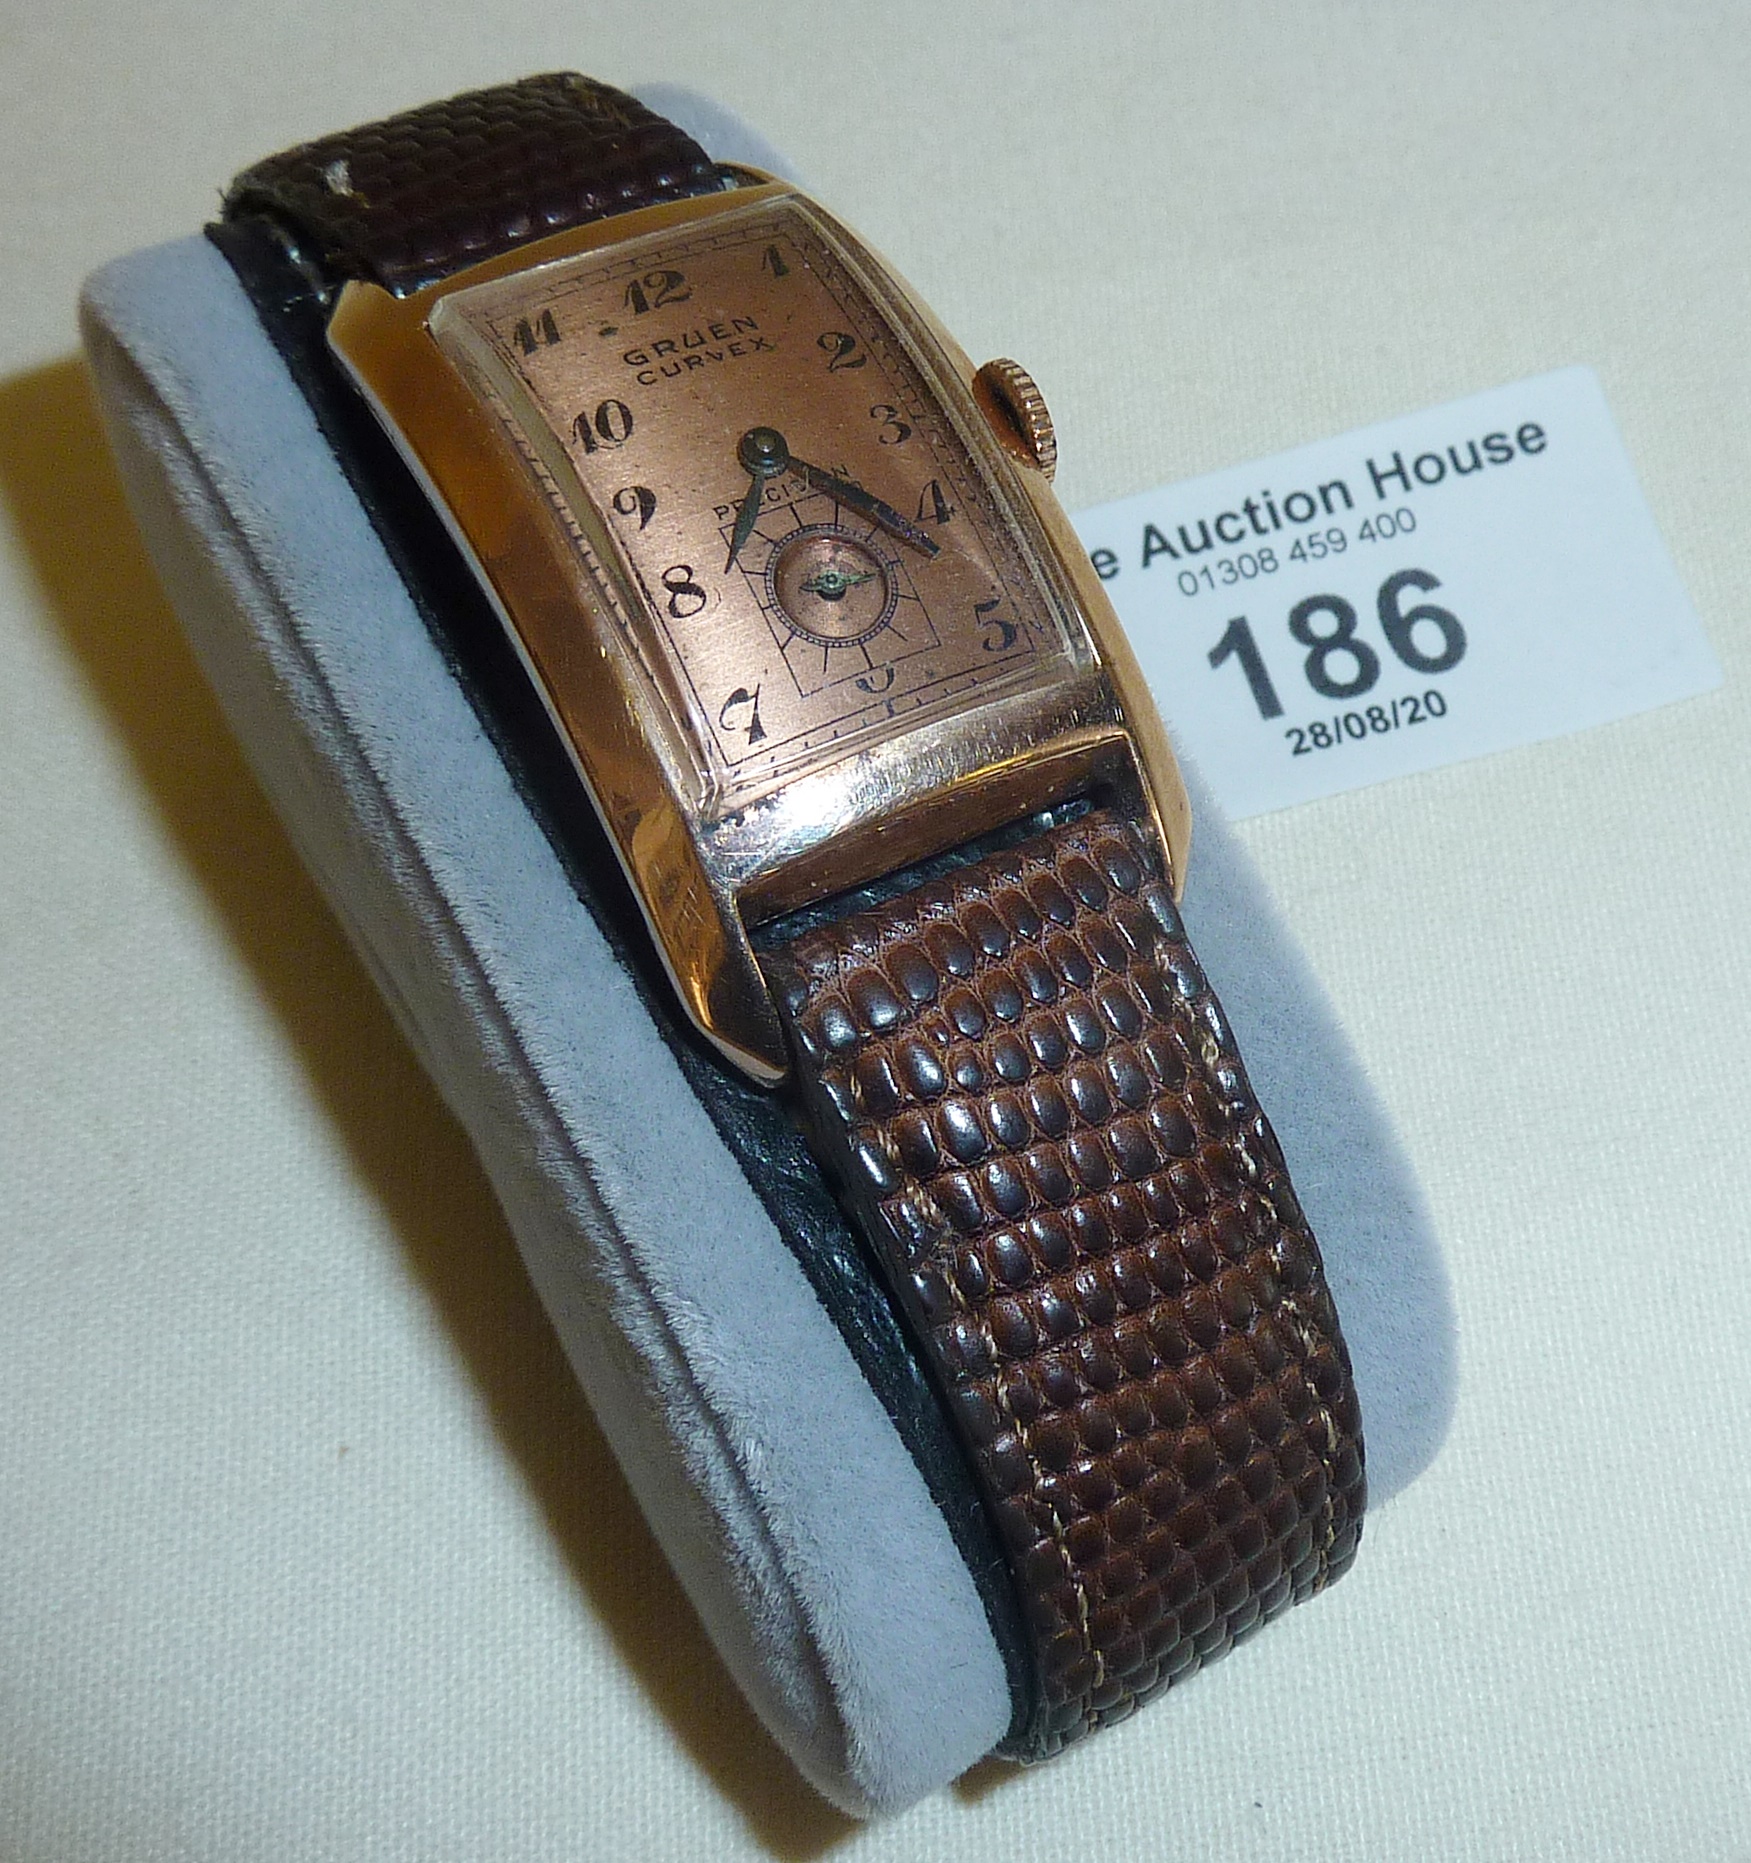 Gruen Curvex Precision Art Deco 14ct rose gold wrist watch (serial no. G434352 440 448) - working